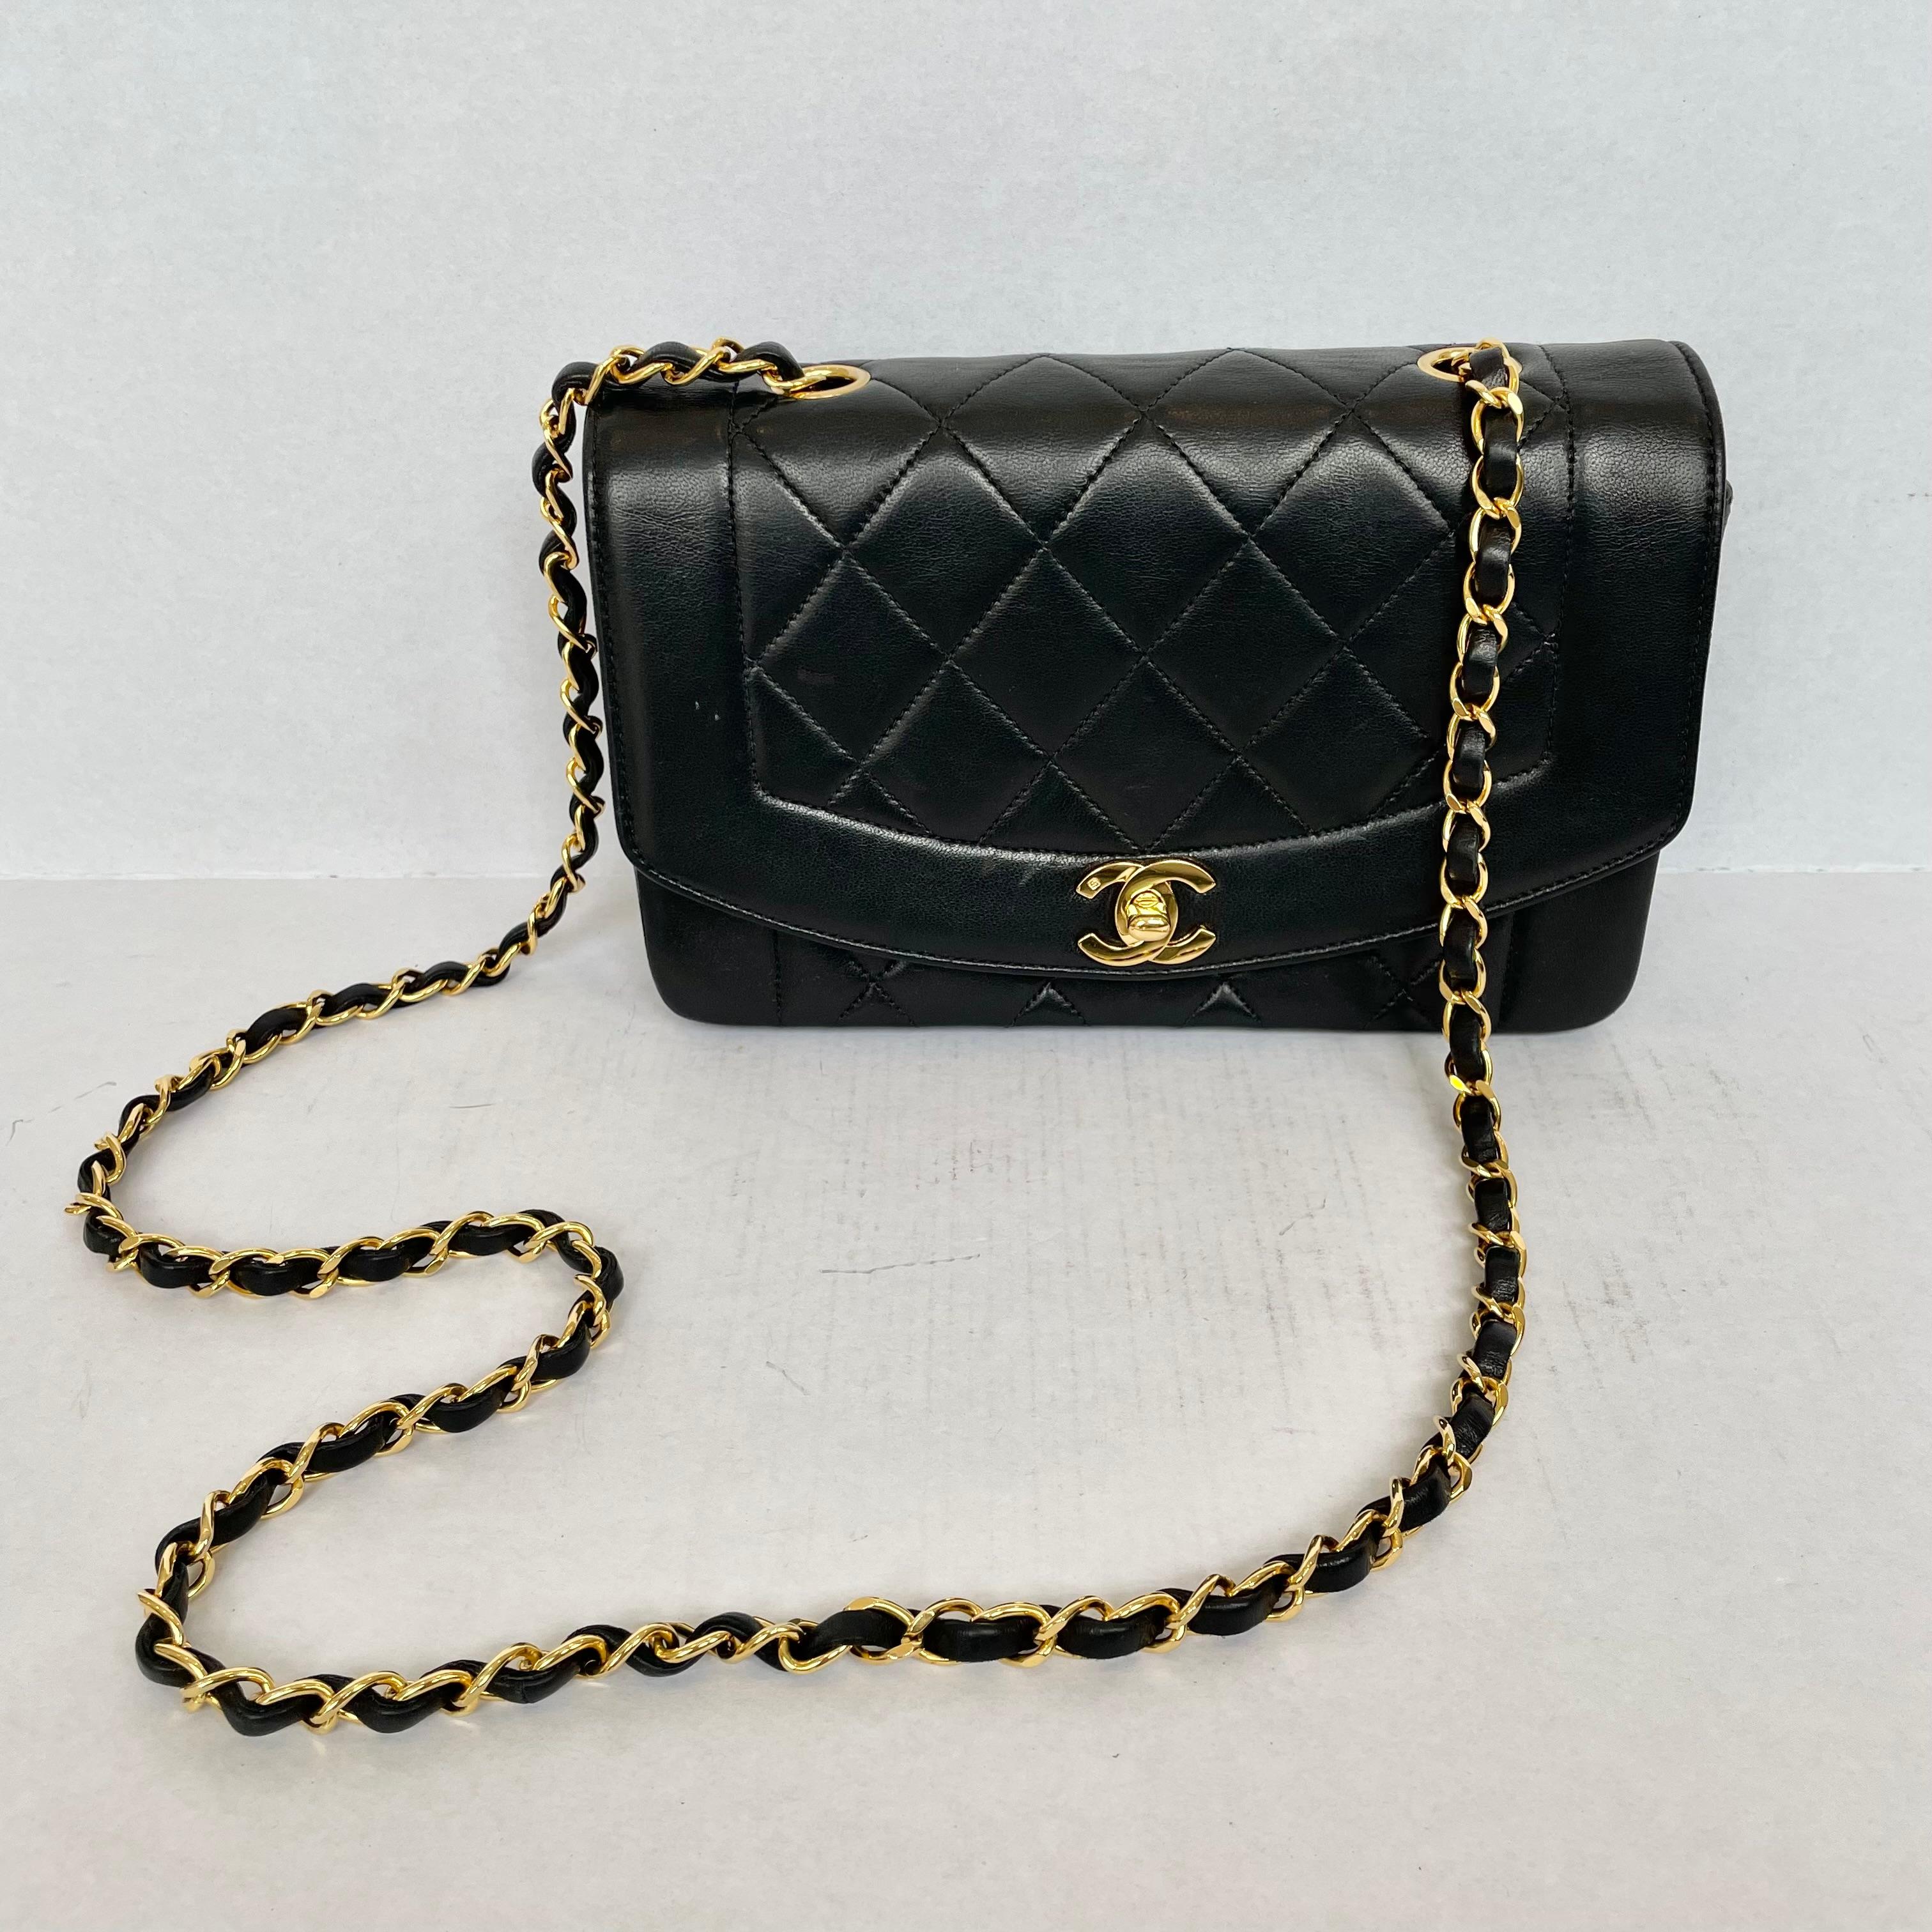 Rare Chanel Diana Shoulder Bag Black Quilted Lambskin Leather, 1990s France For Sale 11